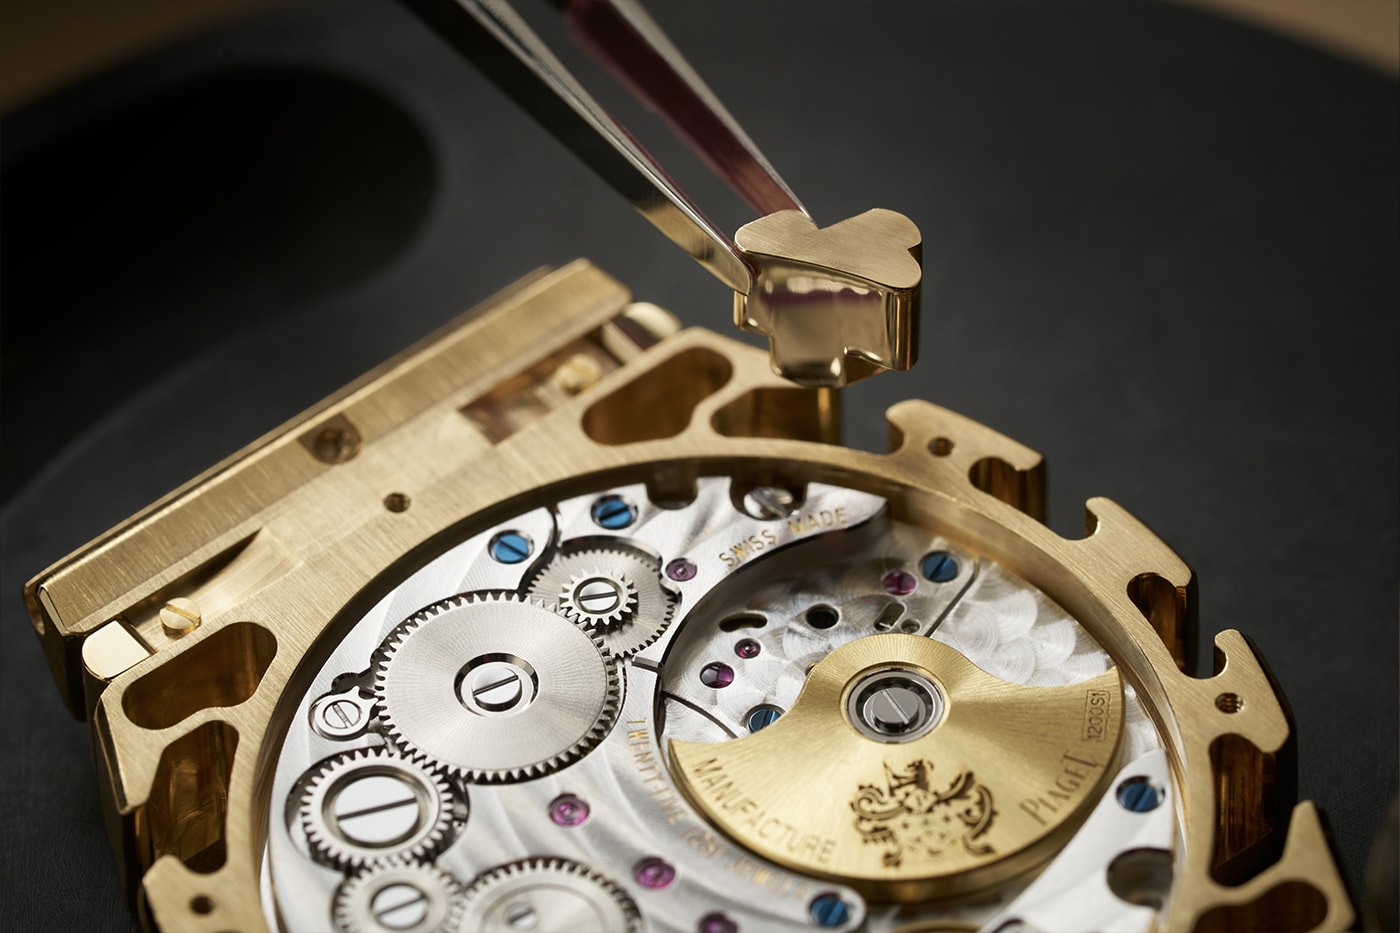 Piaget 重新推出 18K 黃金 Polo 79 經典錶款